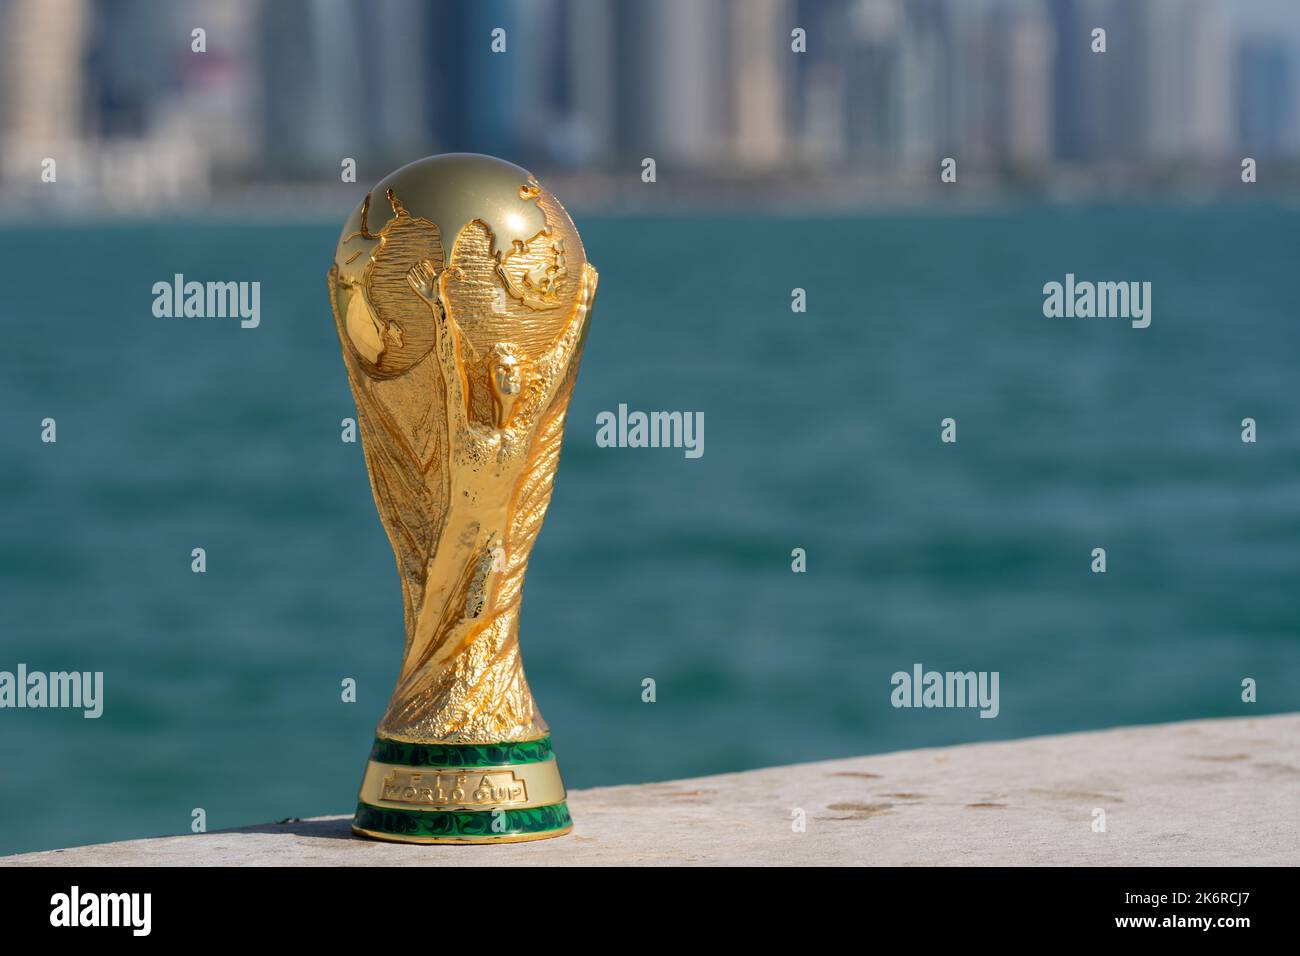 Louis Vuitton unveils official World Cup trophy case ahead of